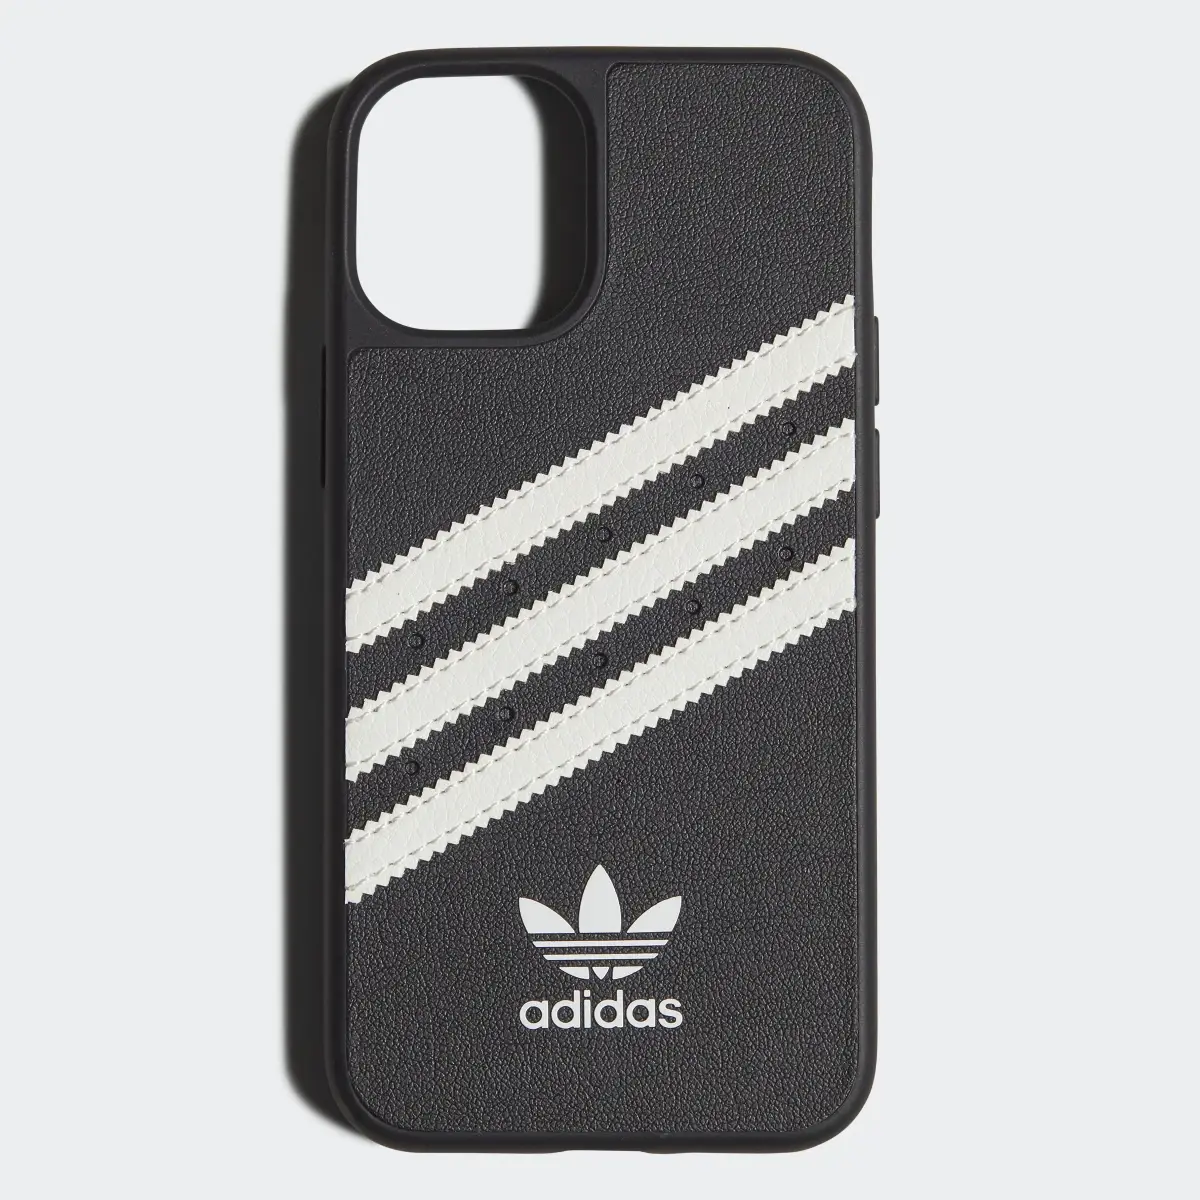 Adidas Molded Samba for iPhone 12 mini. 2